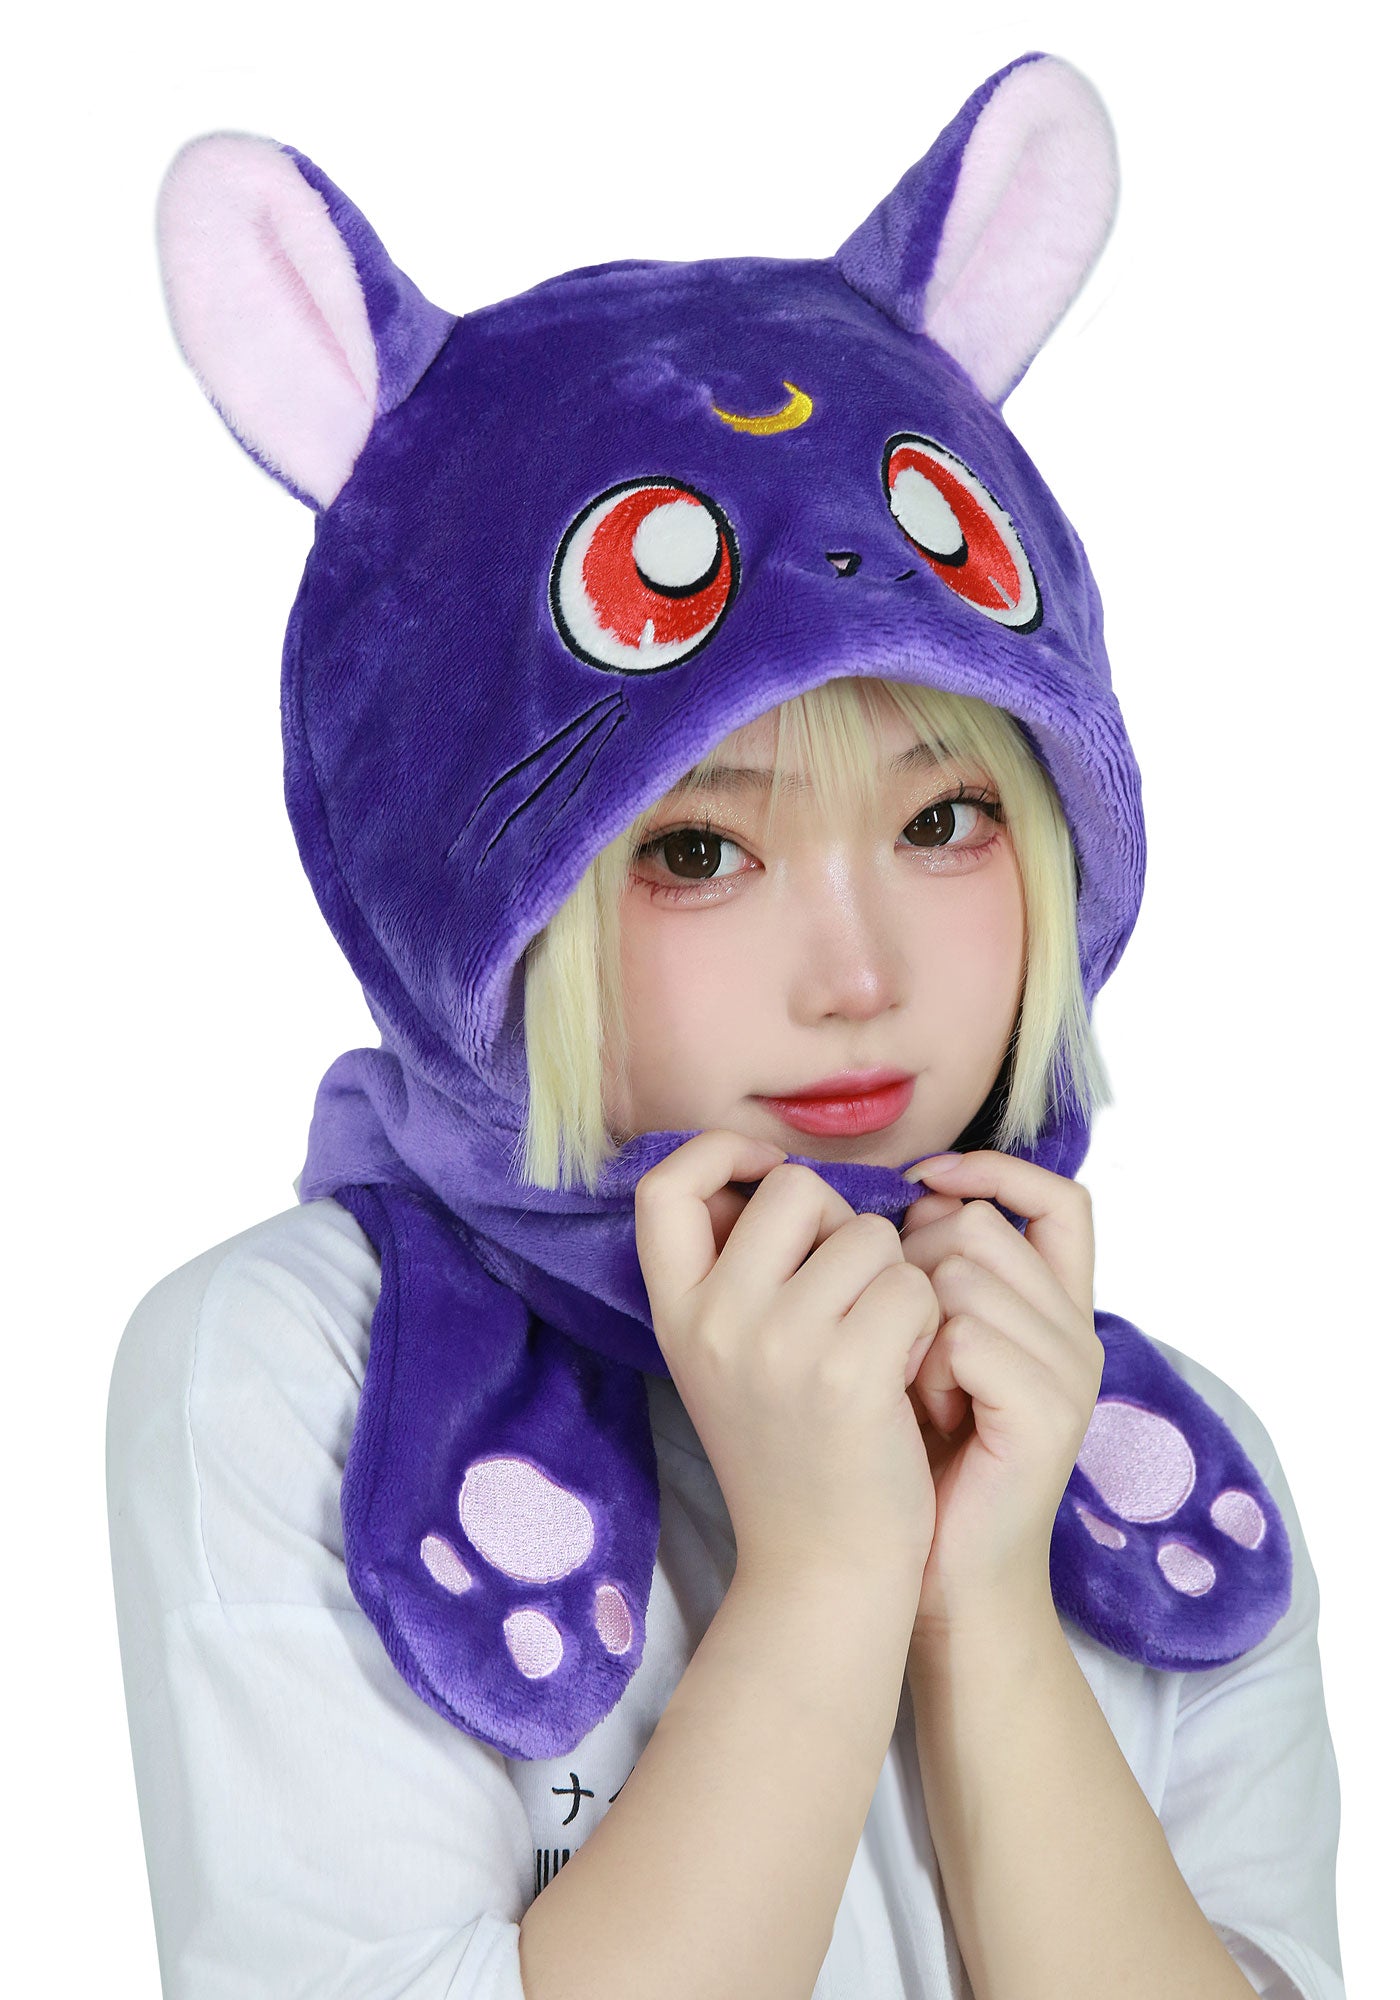 DAZCOS Sailor Luna Hat Cosplay Kigurumi Cap for Women Soft Plush Coif with Cute Moon Pattern Purple